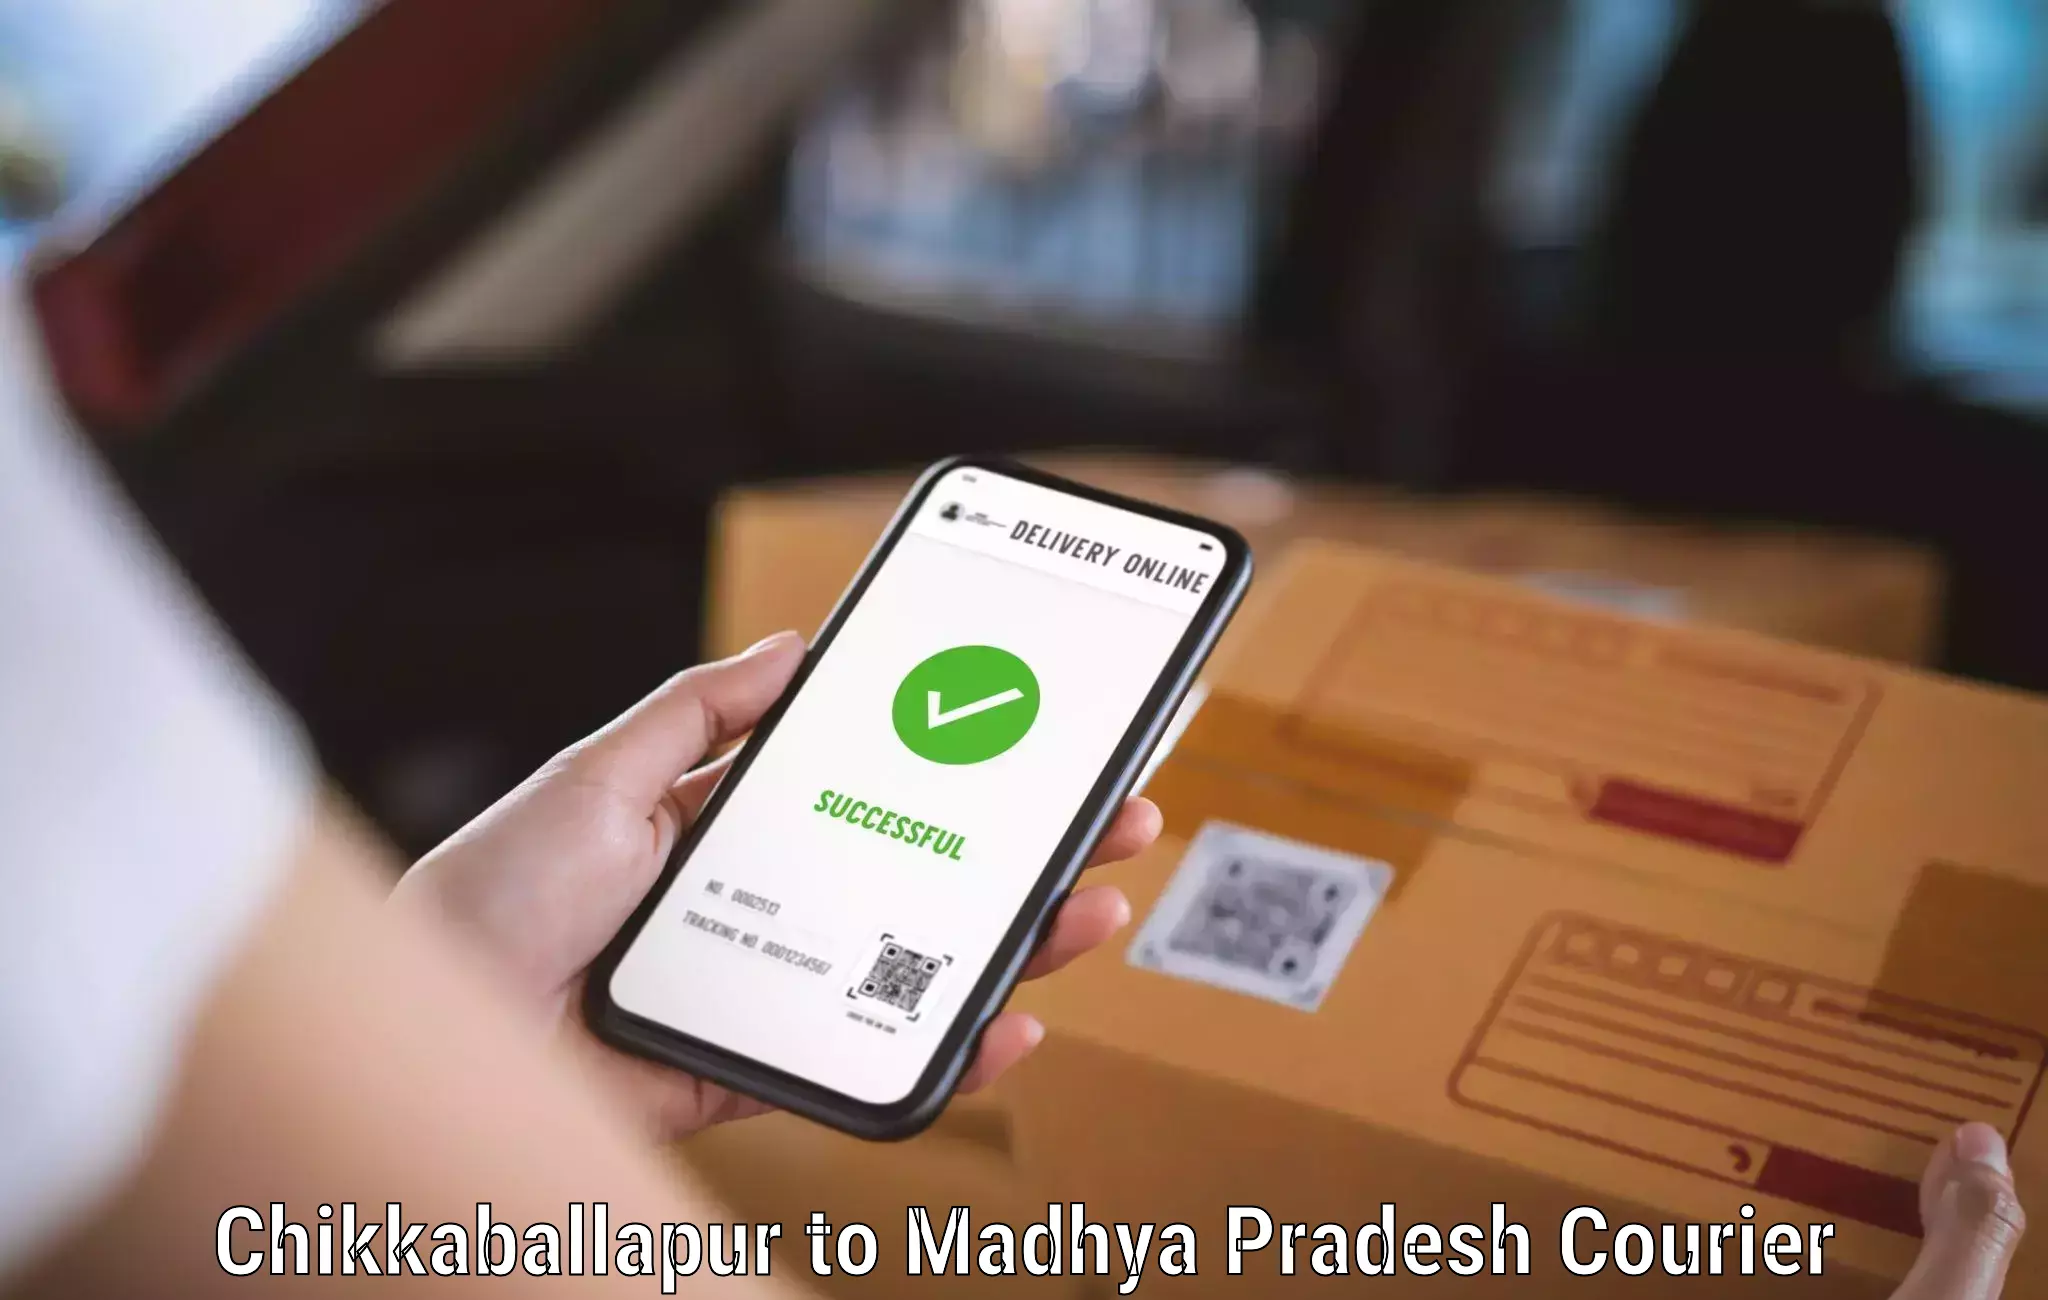 High-speed parcel service Chikkaballapur to Ashta